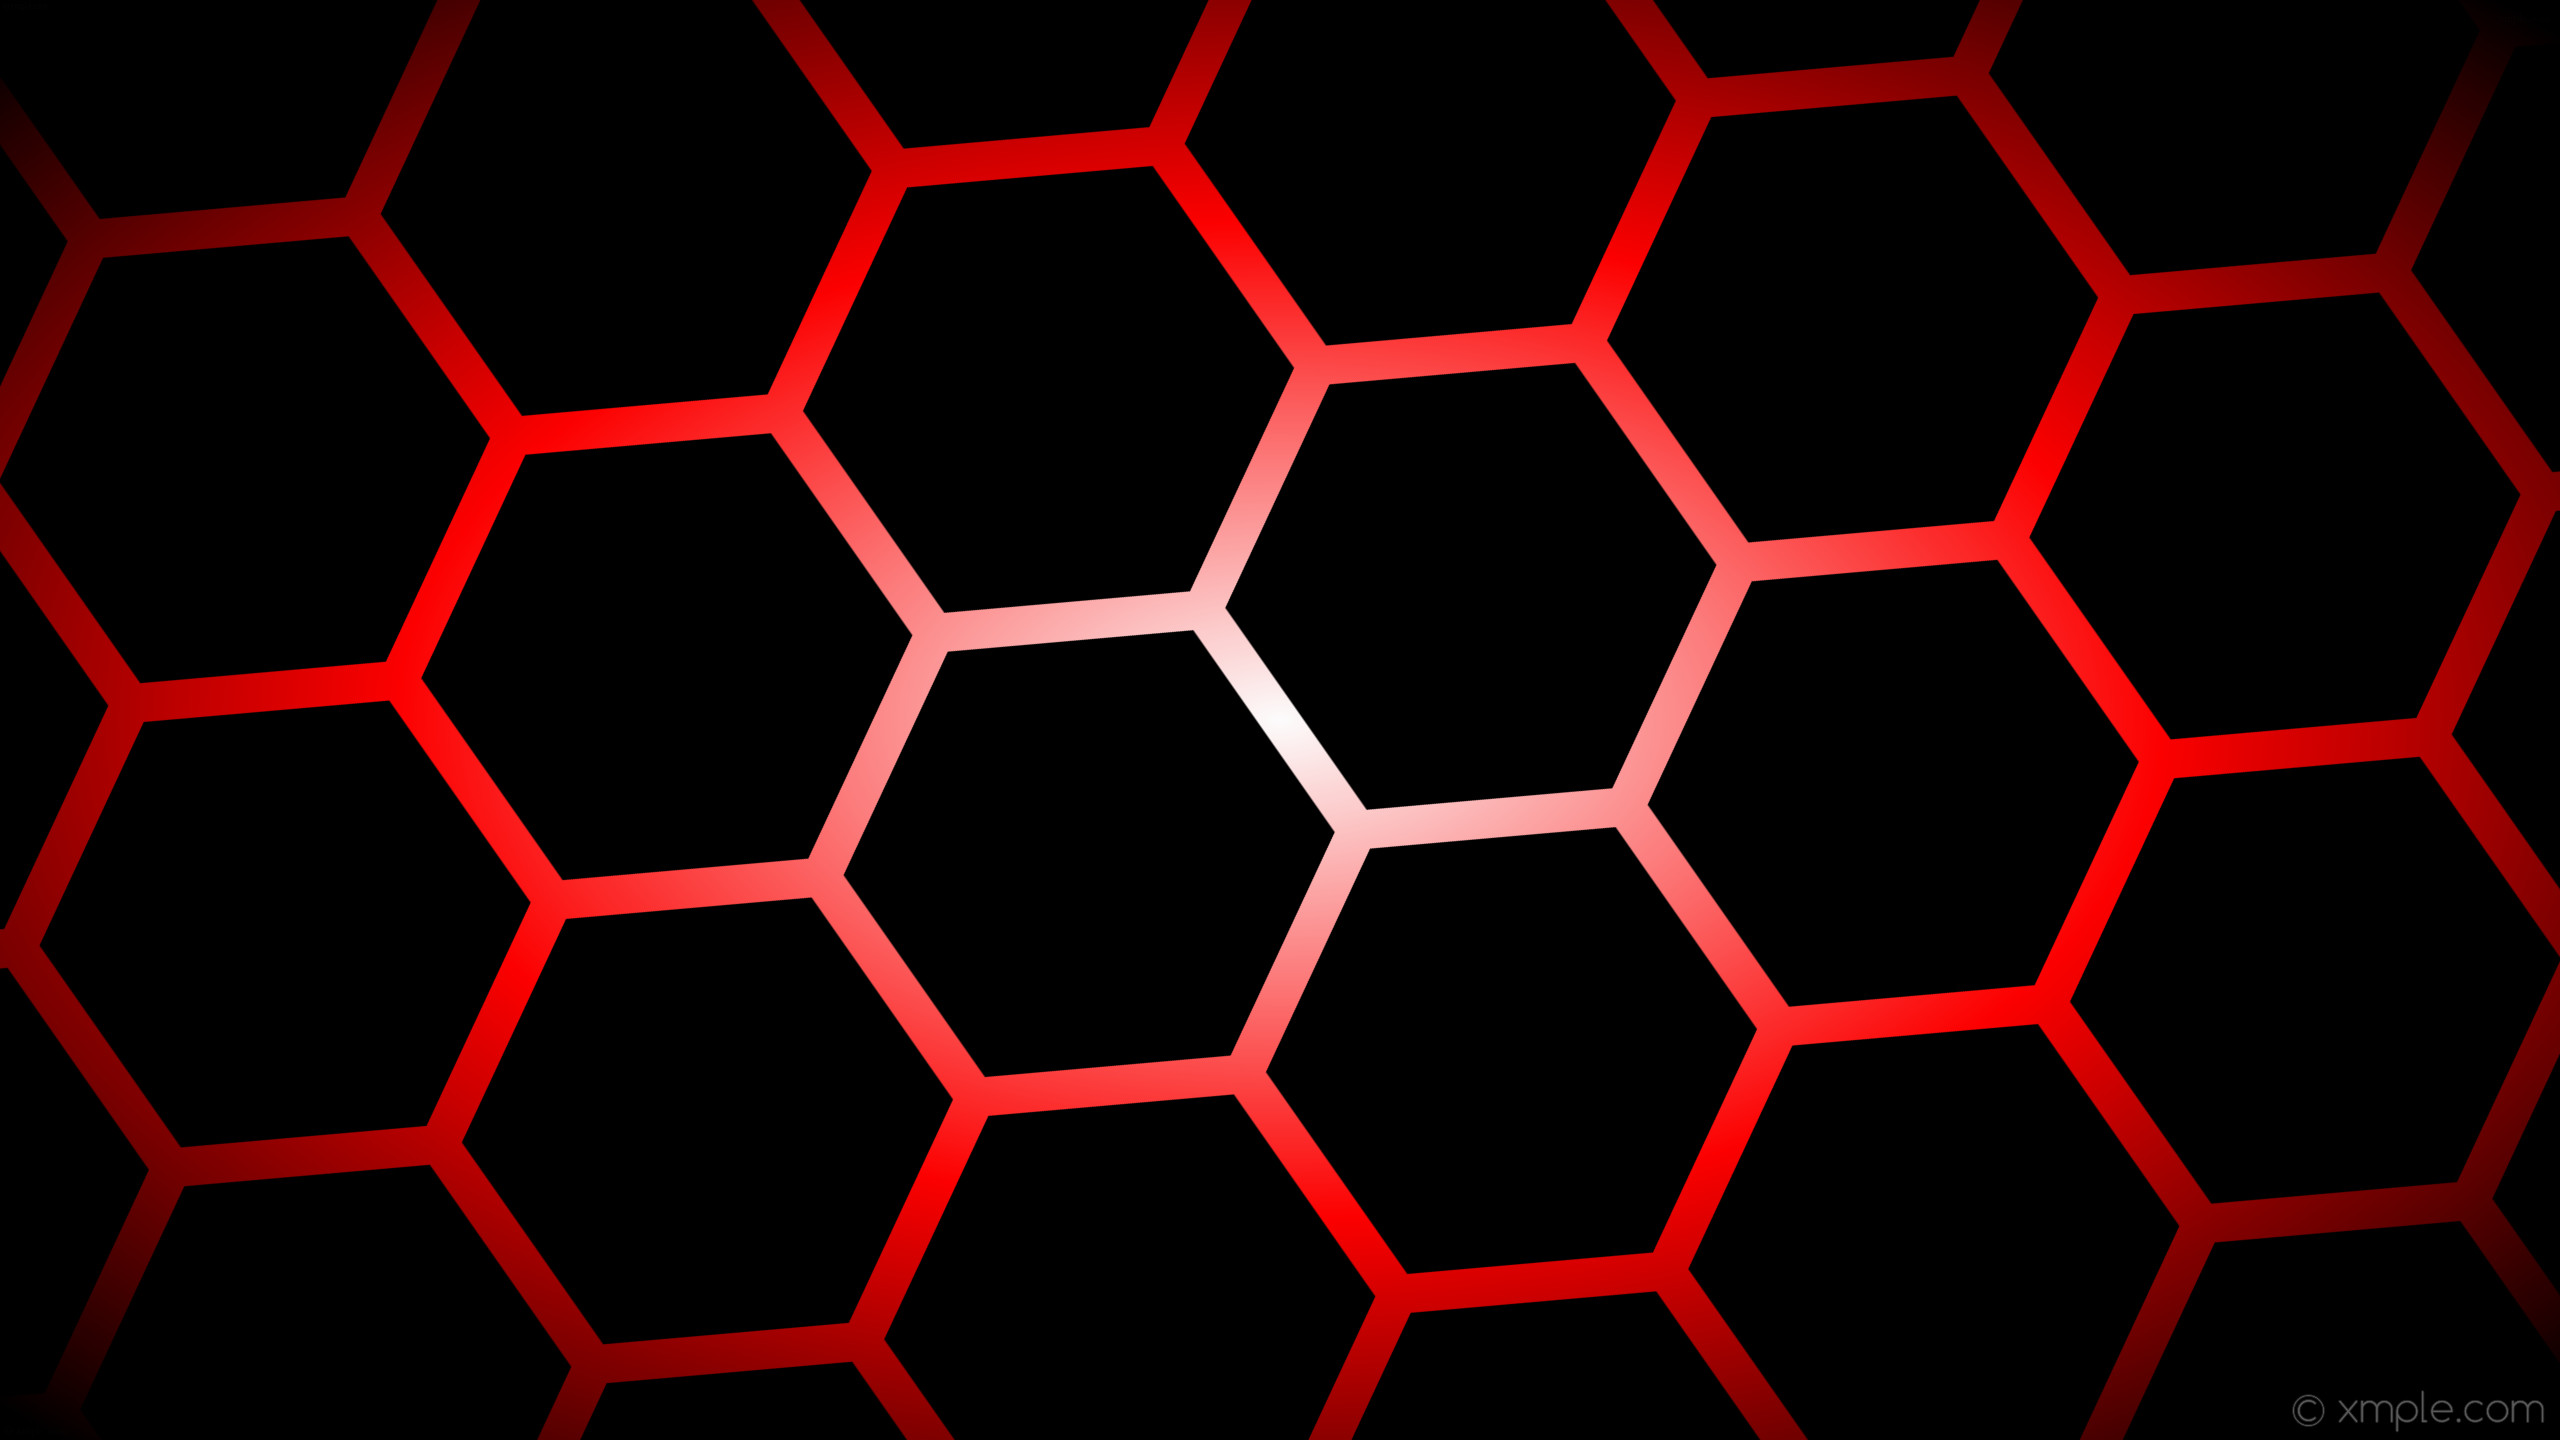 2560x1440 wallpaper black glow hexagon white gradient red #000000 #ffffff #ff0000  diagonal 35Â°. Wallpaper background black glow hexagon white gradient red   ...